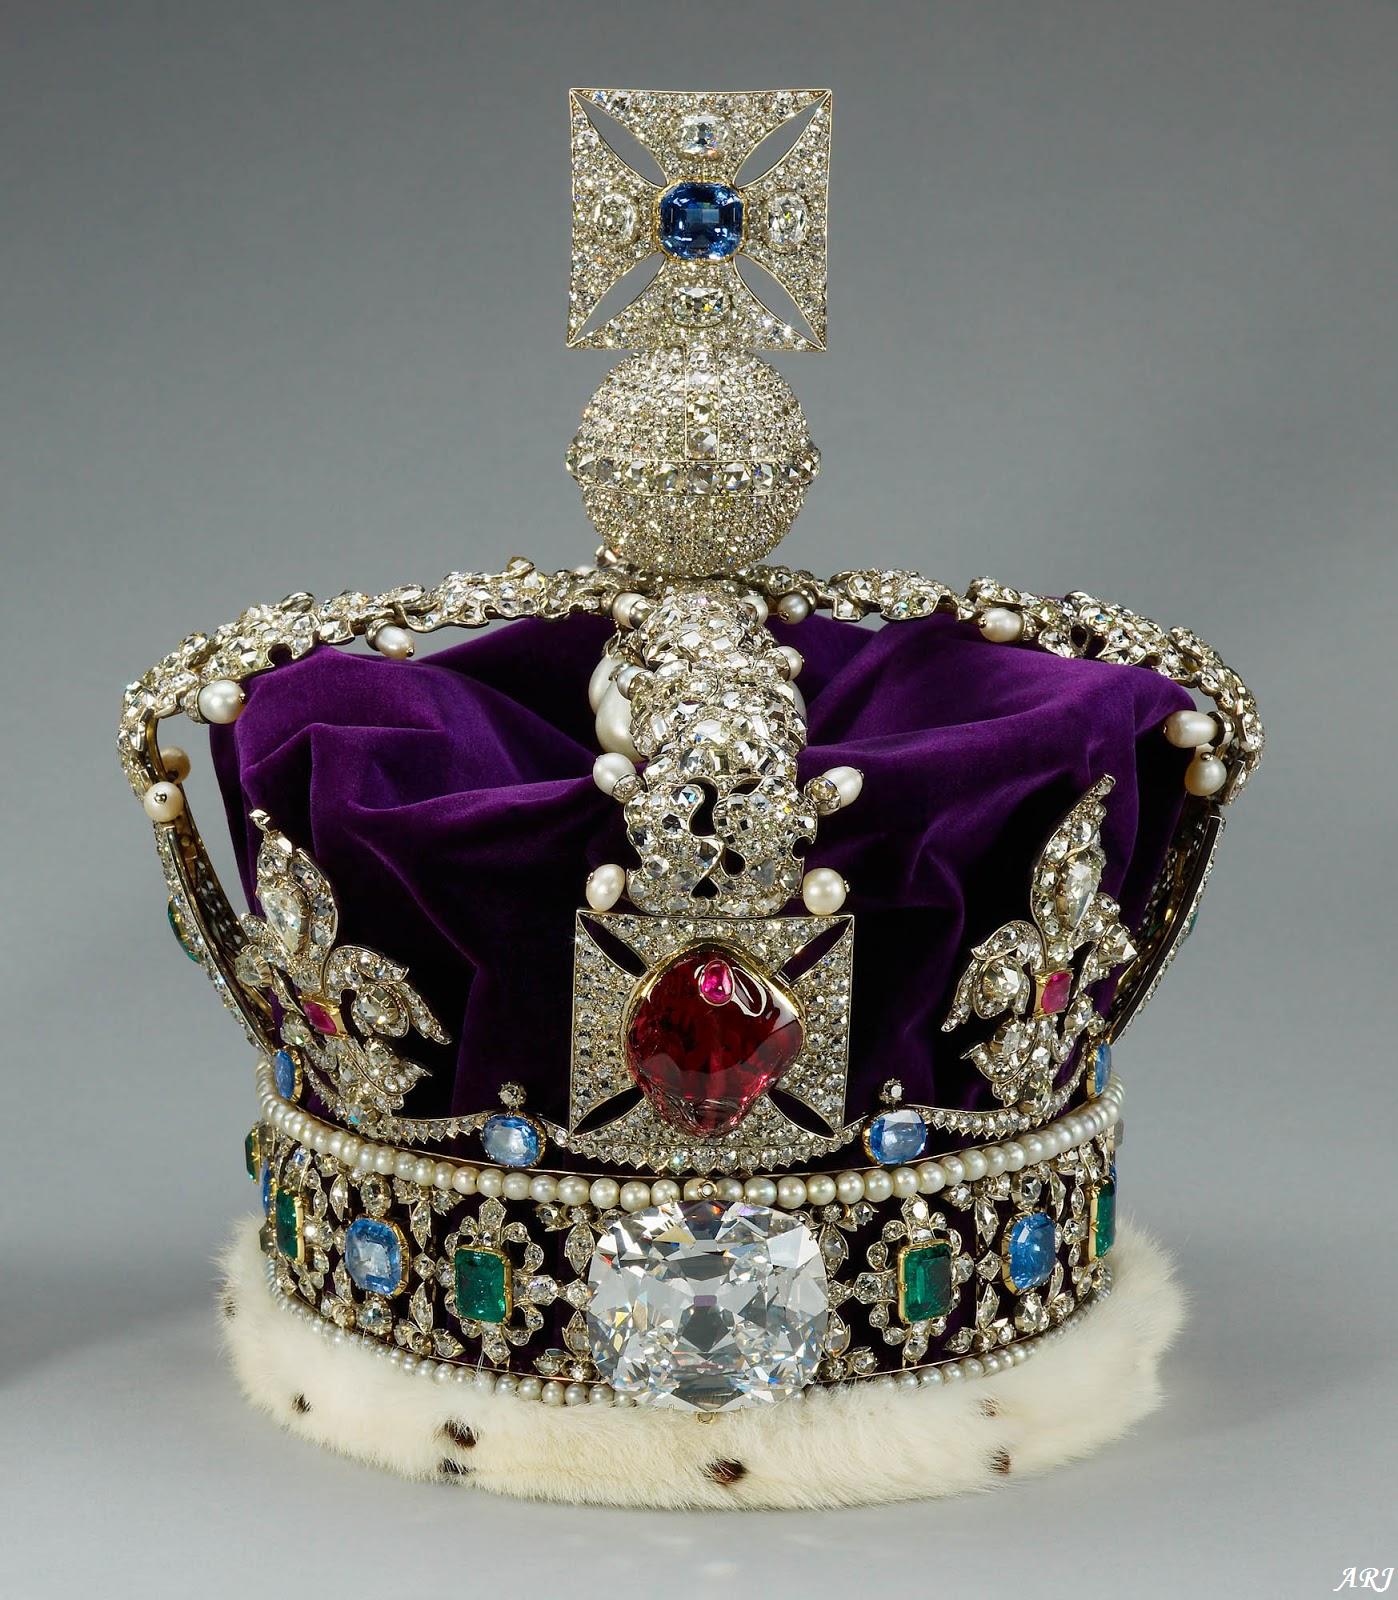 Artemisia's Royal Jewels: British Royal Jewels:Cullinan II Diamond (The